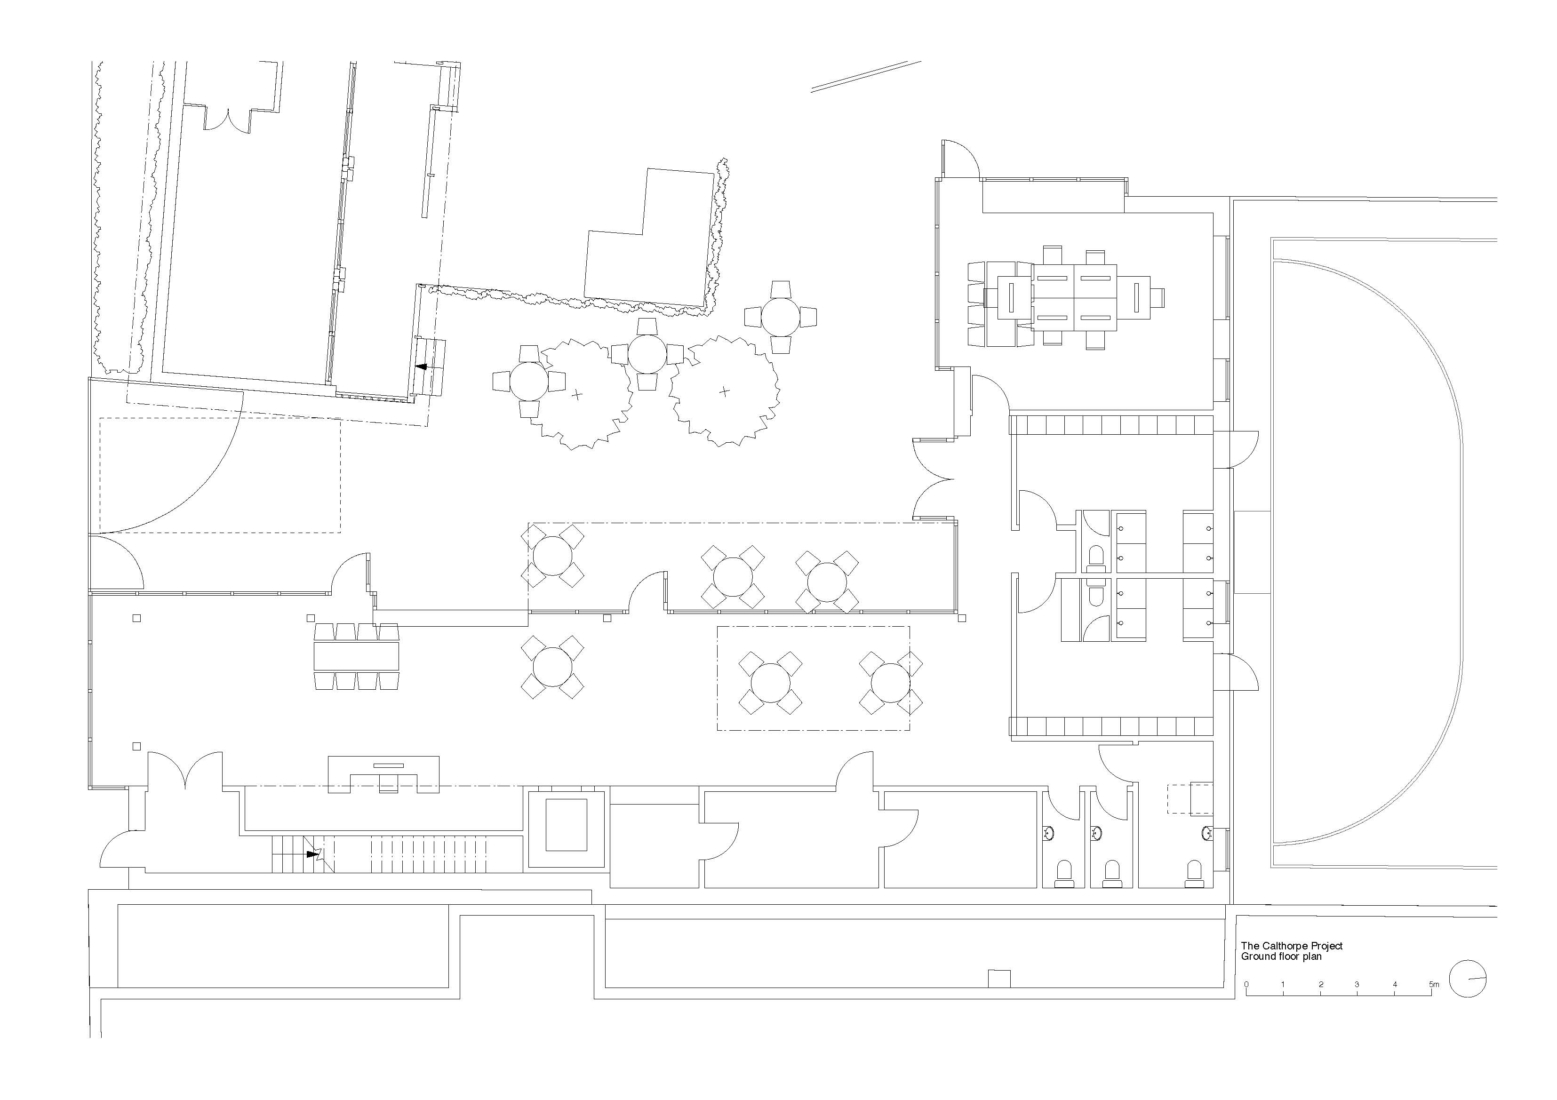 The Calthorpe ground floor plan